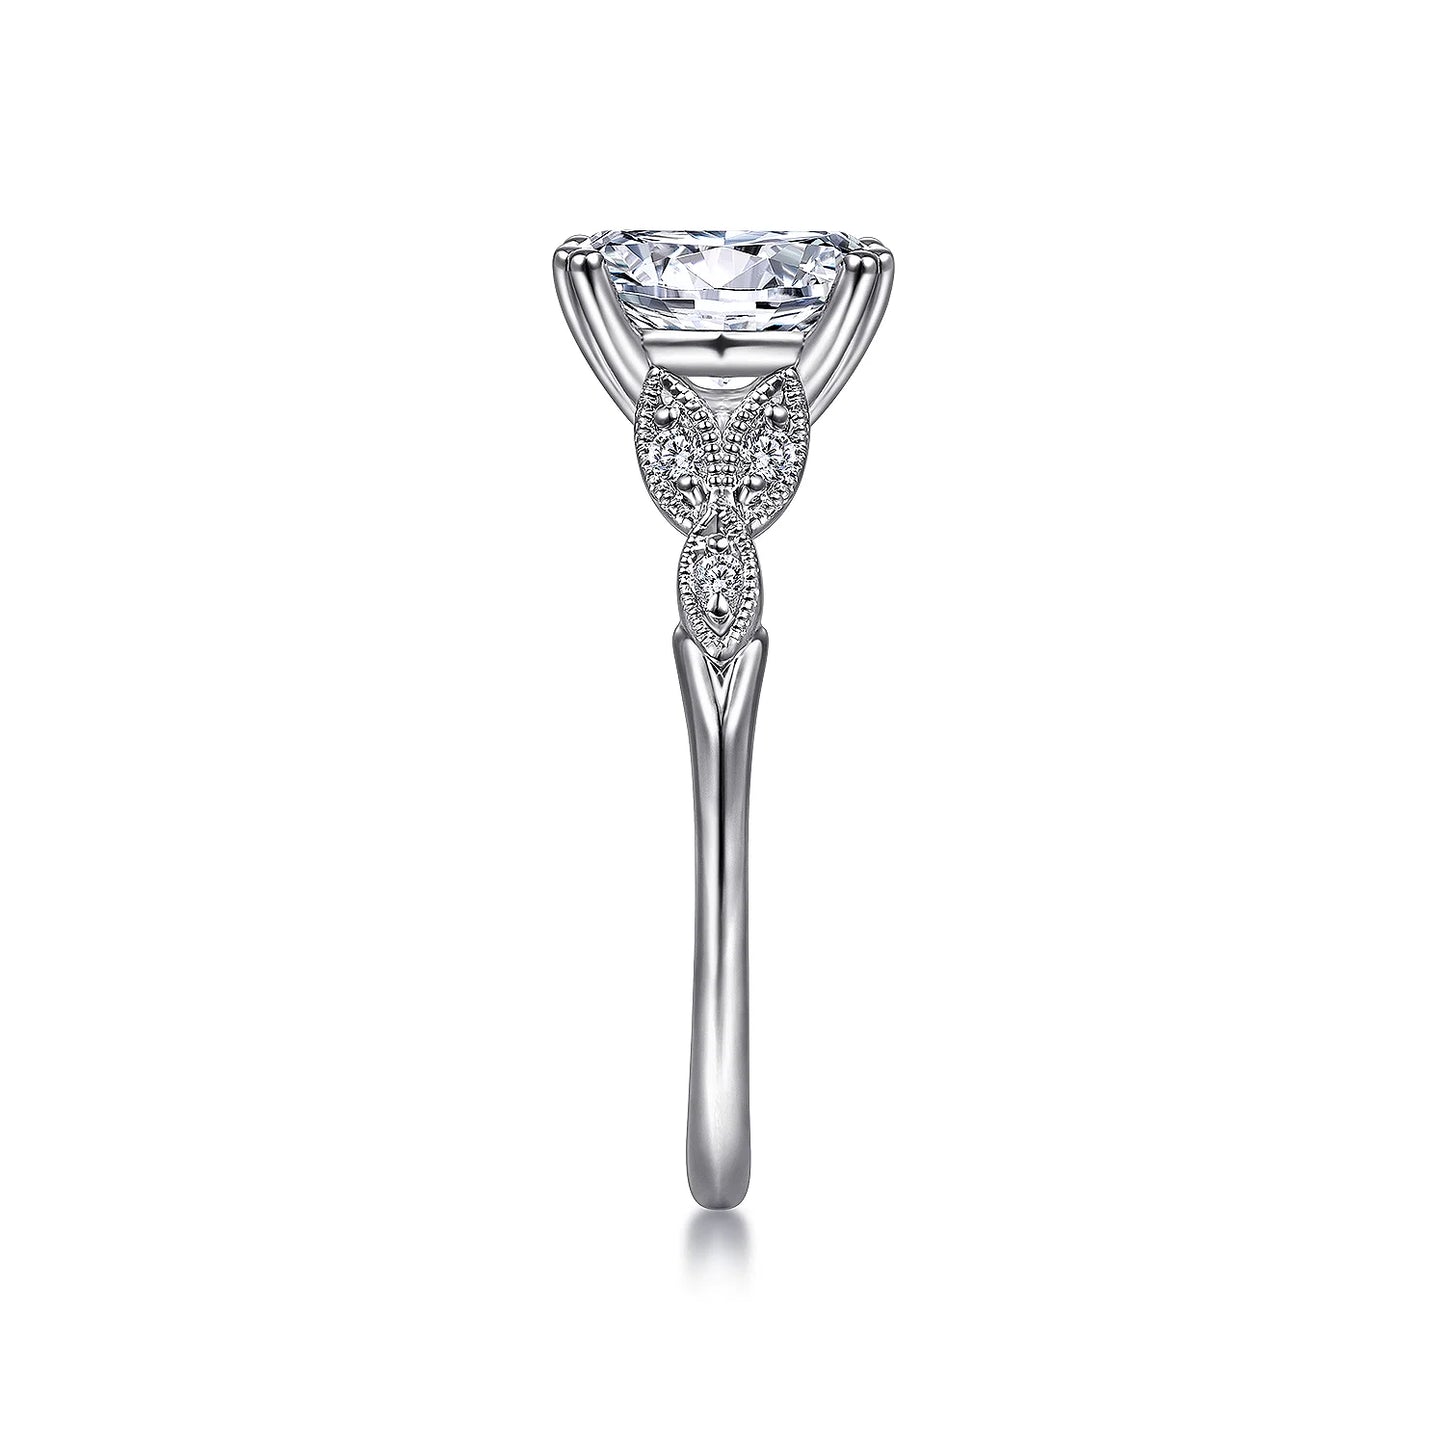 Gabriel & Co. - Celia - 14K White Gold Oval Diamond Engagement Ring - Diamond Semi-Mount Rings